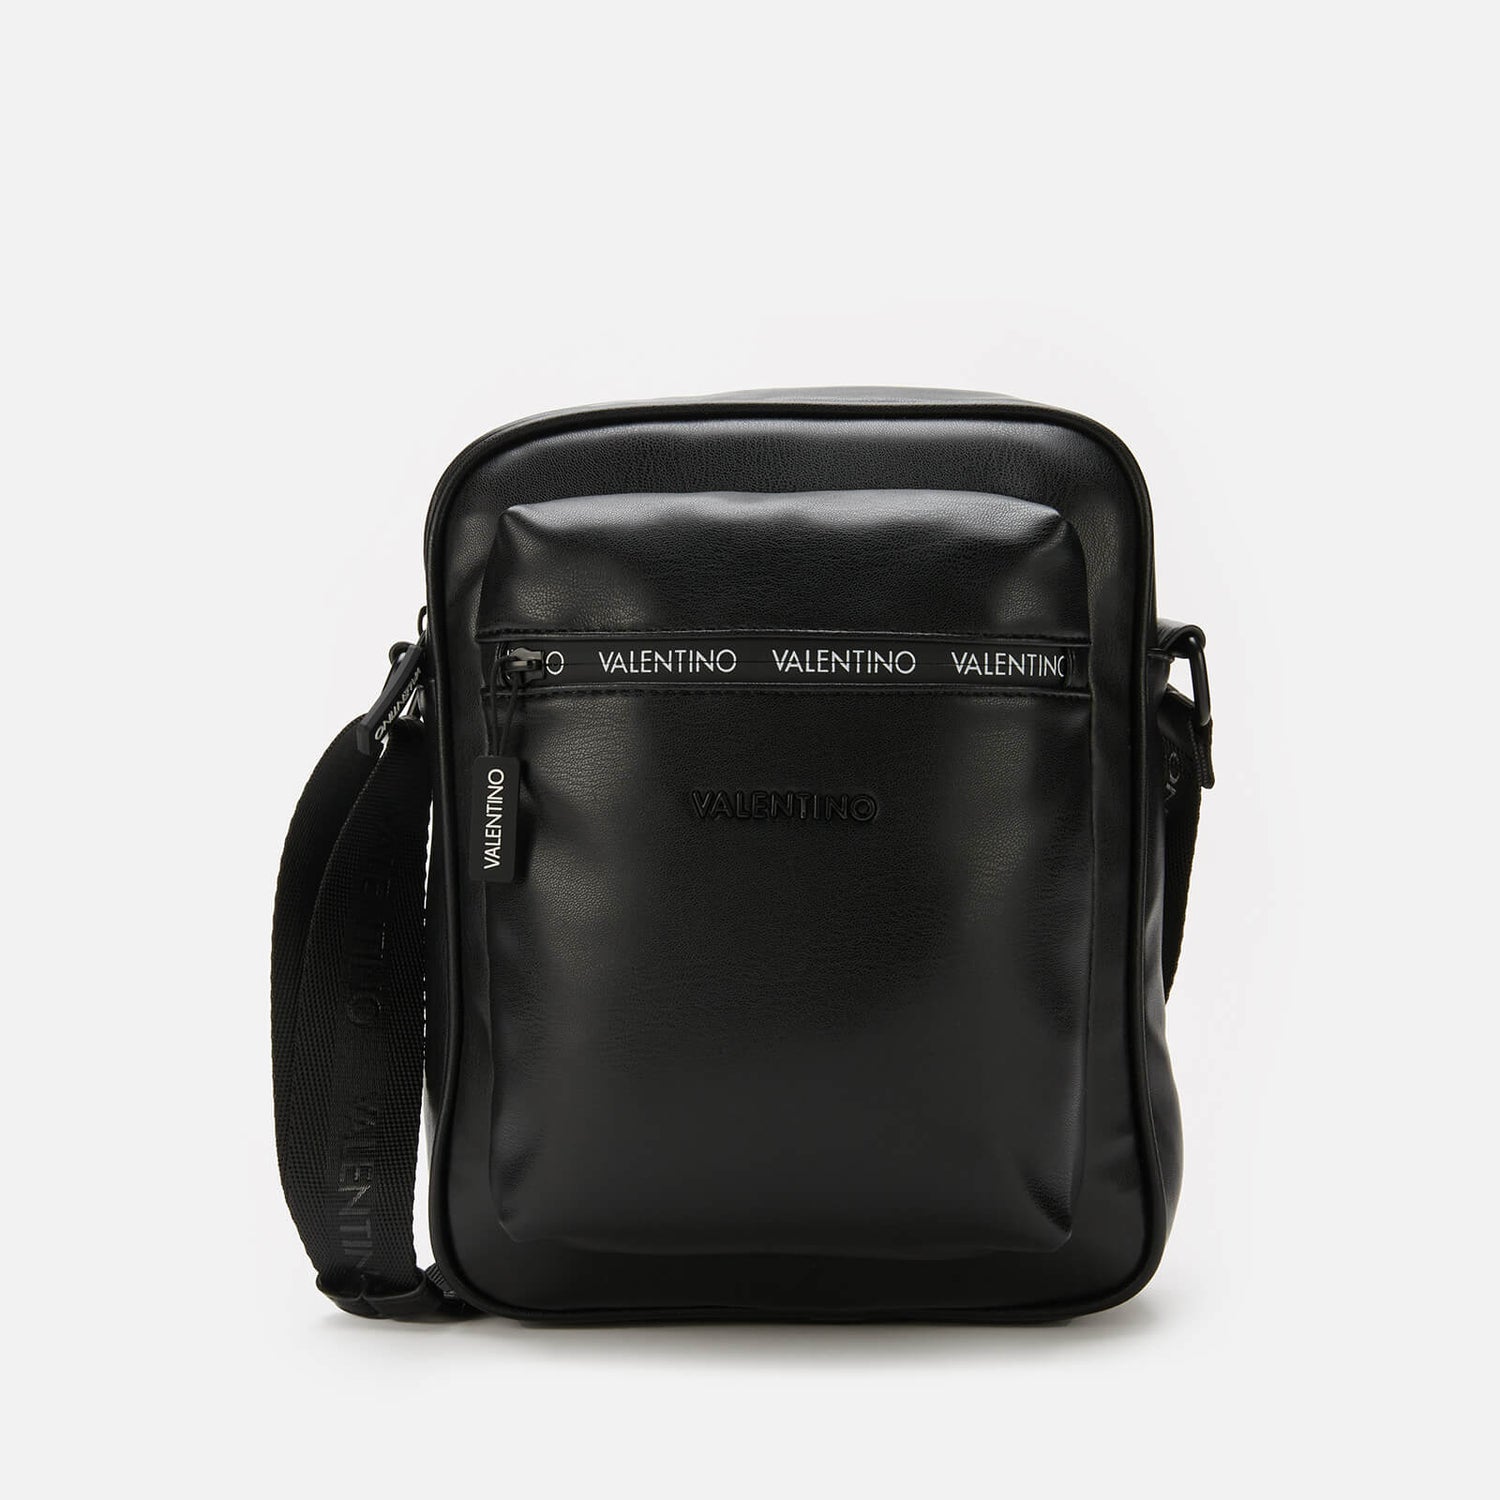 Valentino Men's Vermut Cross Body Bag - Black